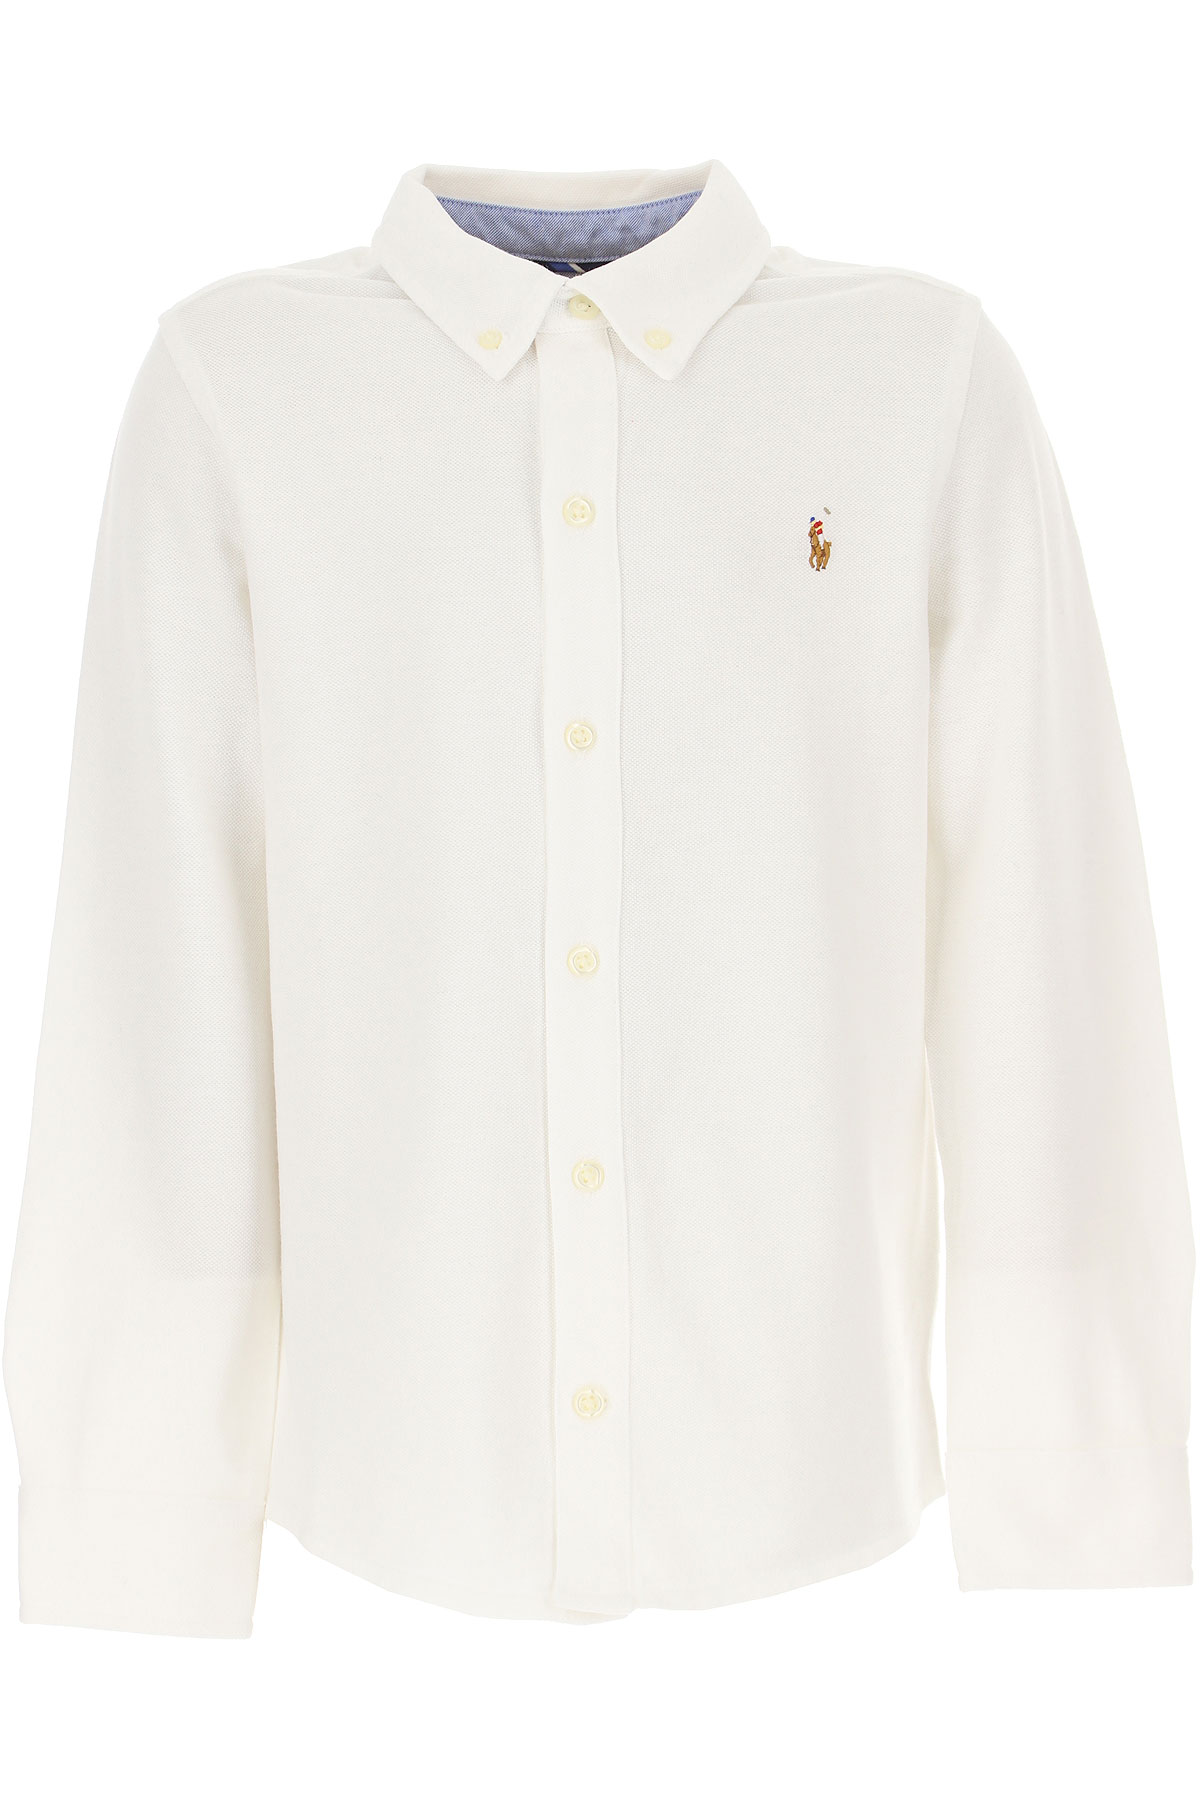 Ralph Lauren Kids Shirts for Boys, White, Cotton, 2021, 2Y 3Y